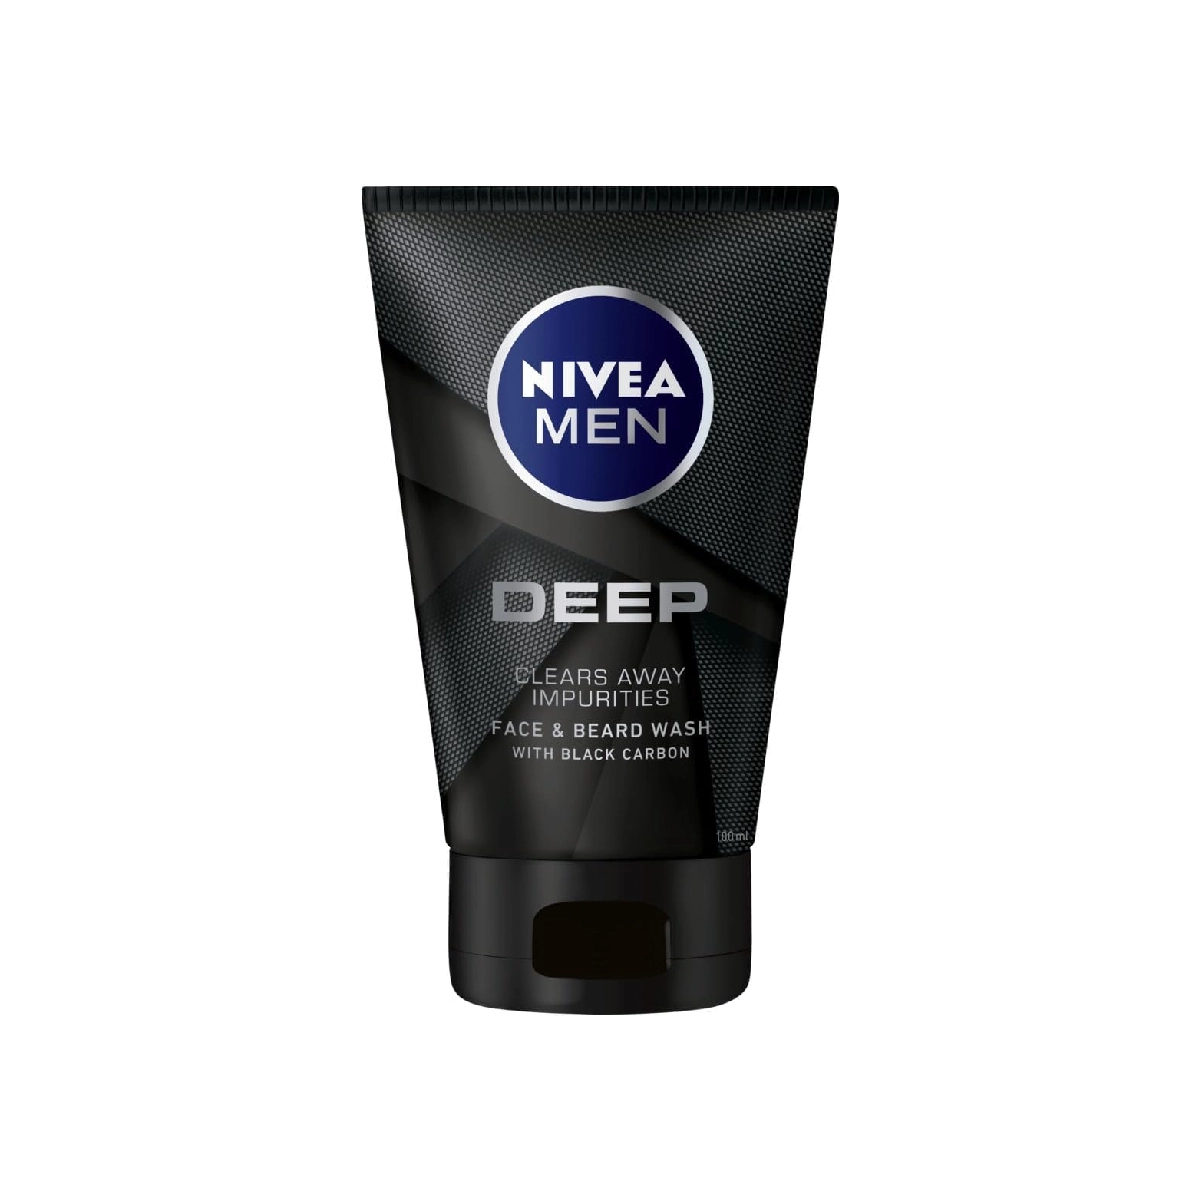 NIVEA MEN Deep Face and Beard Wash